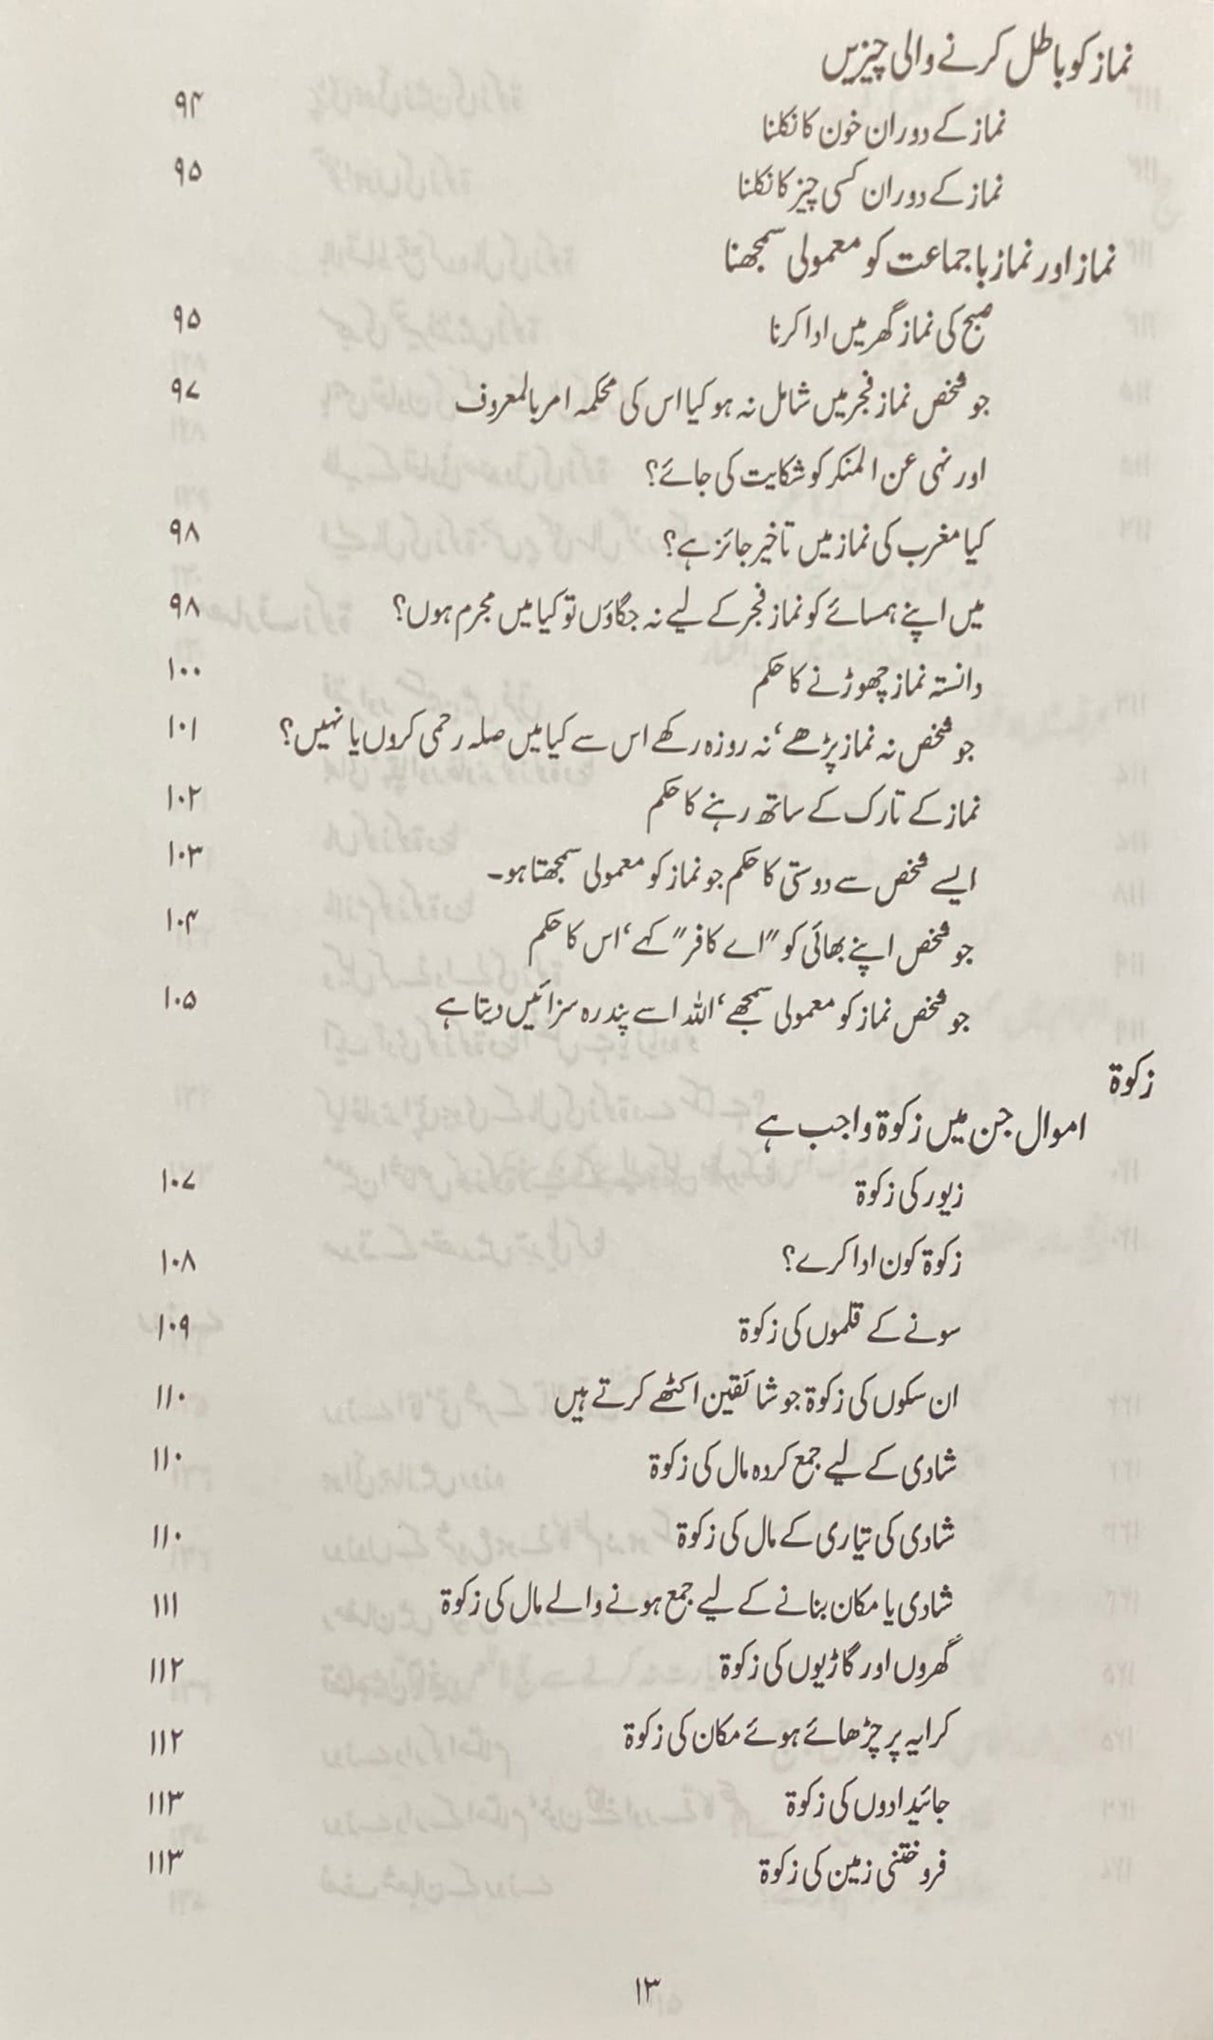 Urdu Fatawa Aham Masaail Volume 1